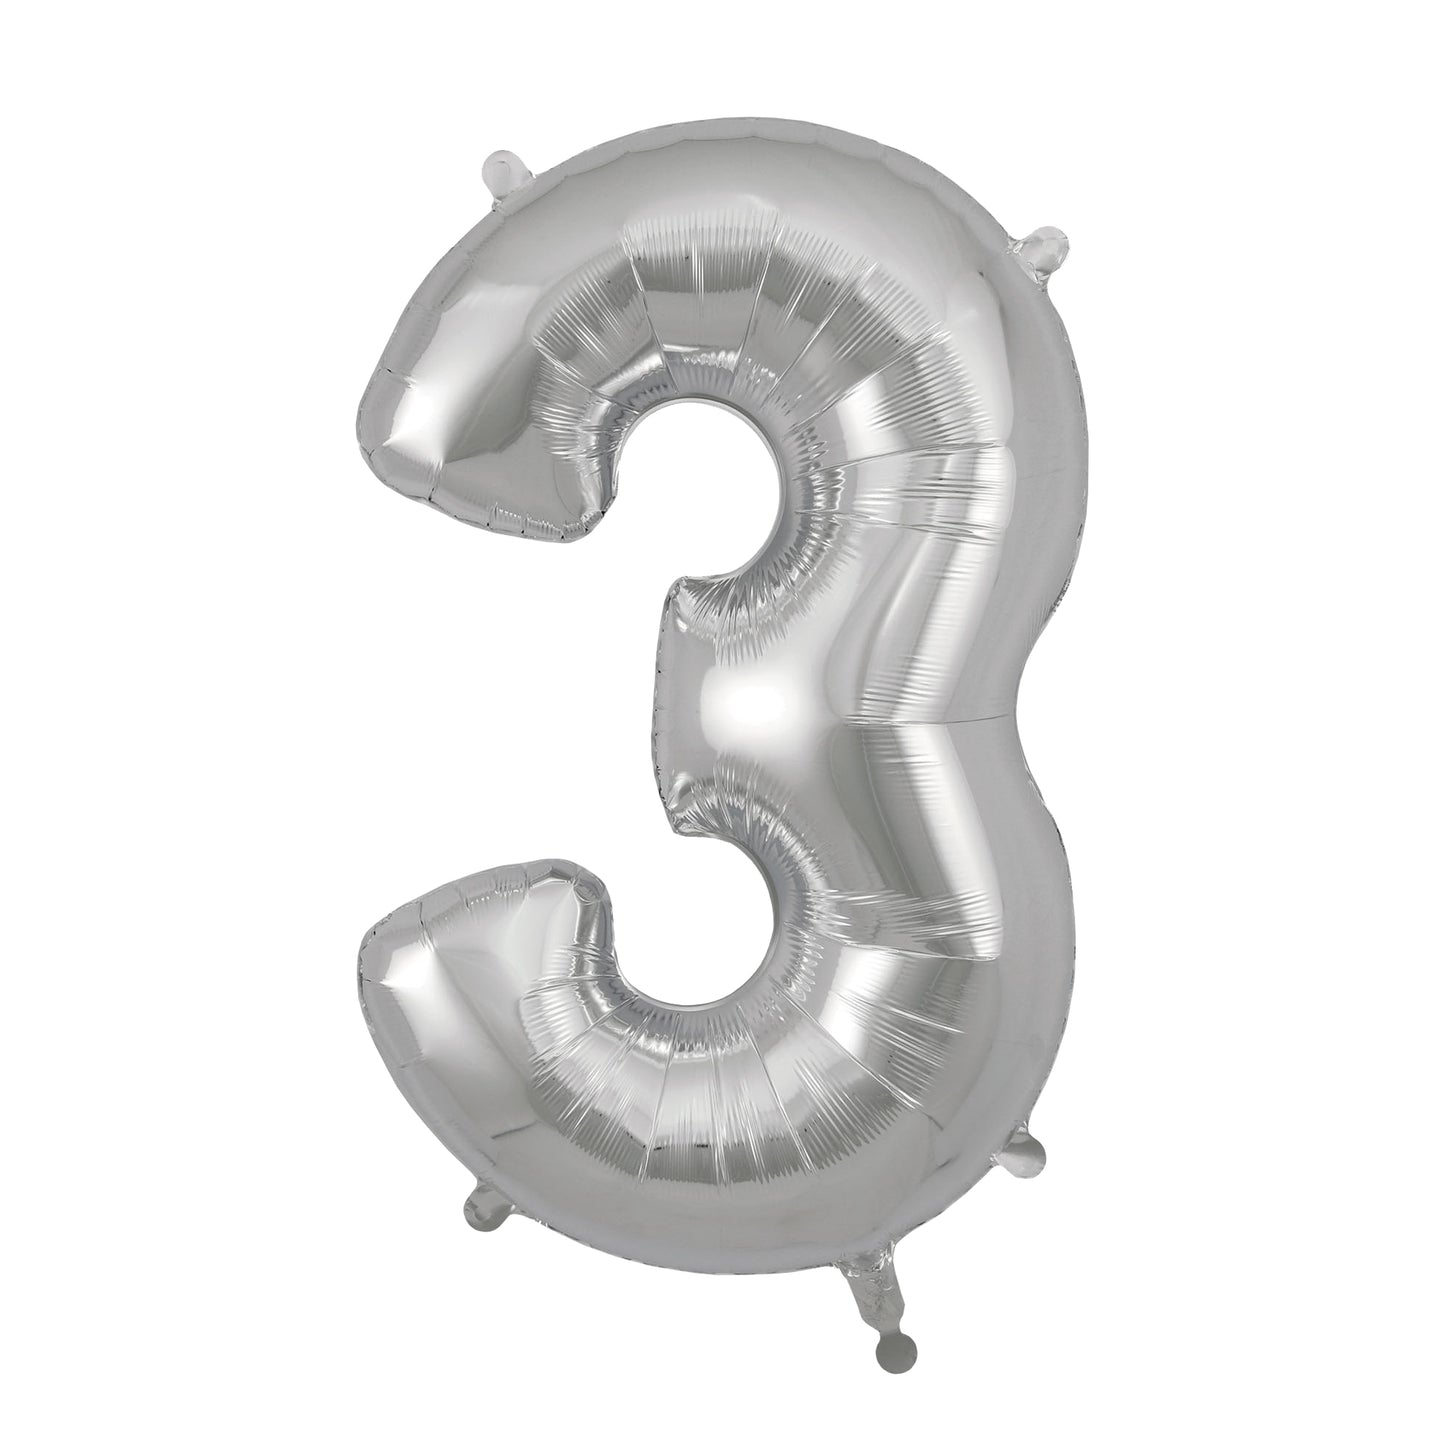 NUMERO ARGENTATO "3"– Foil Balloon